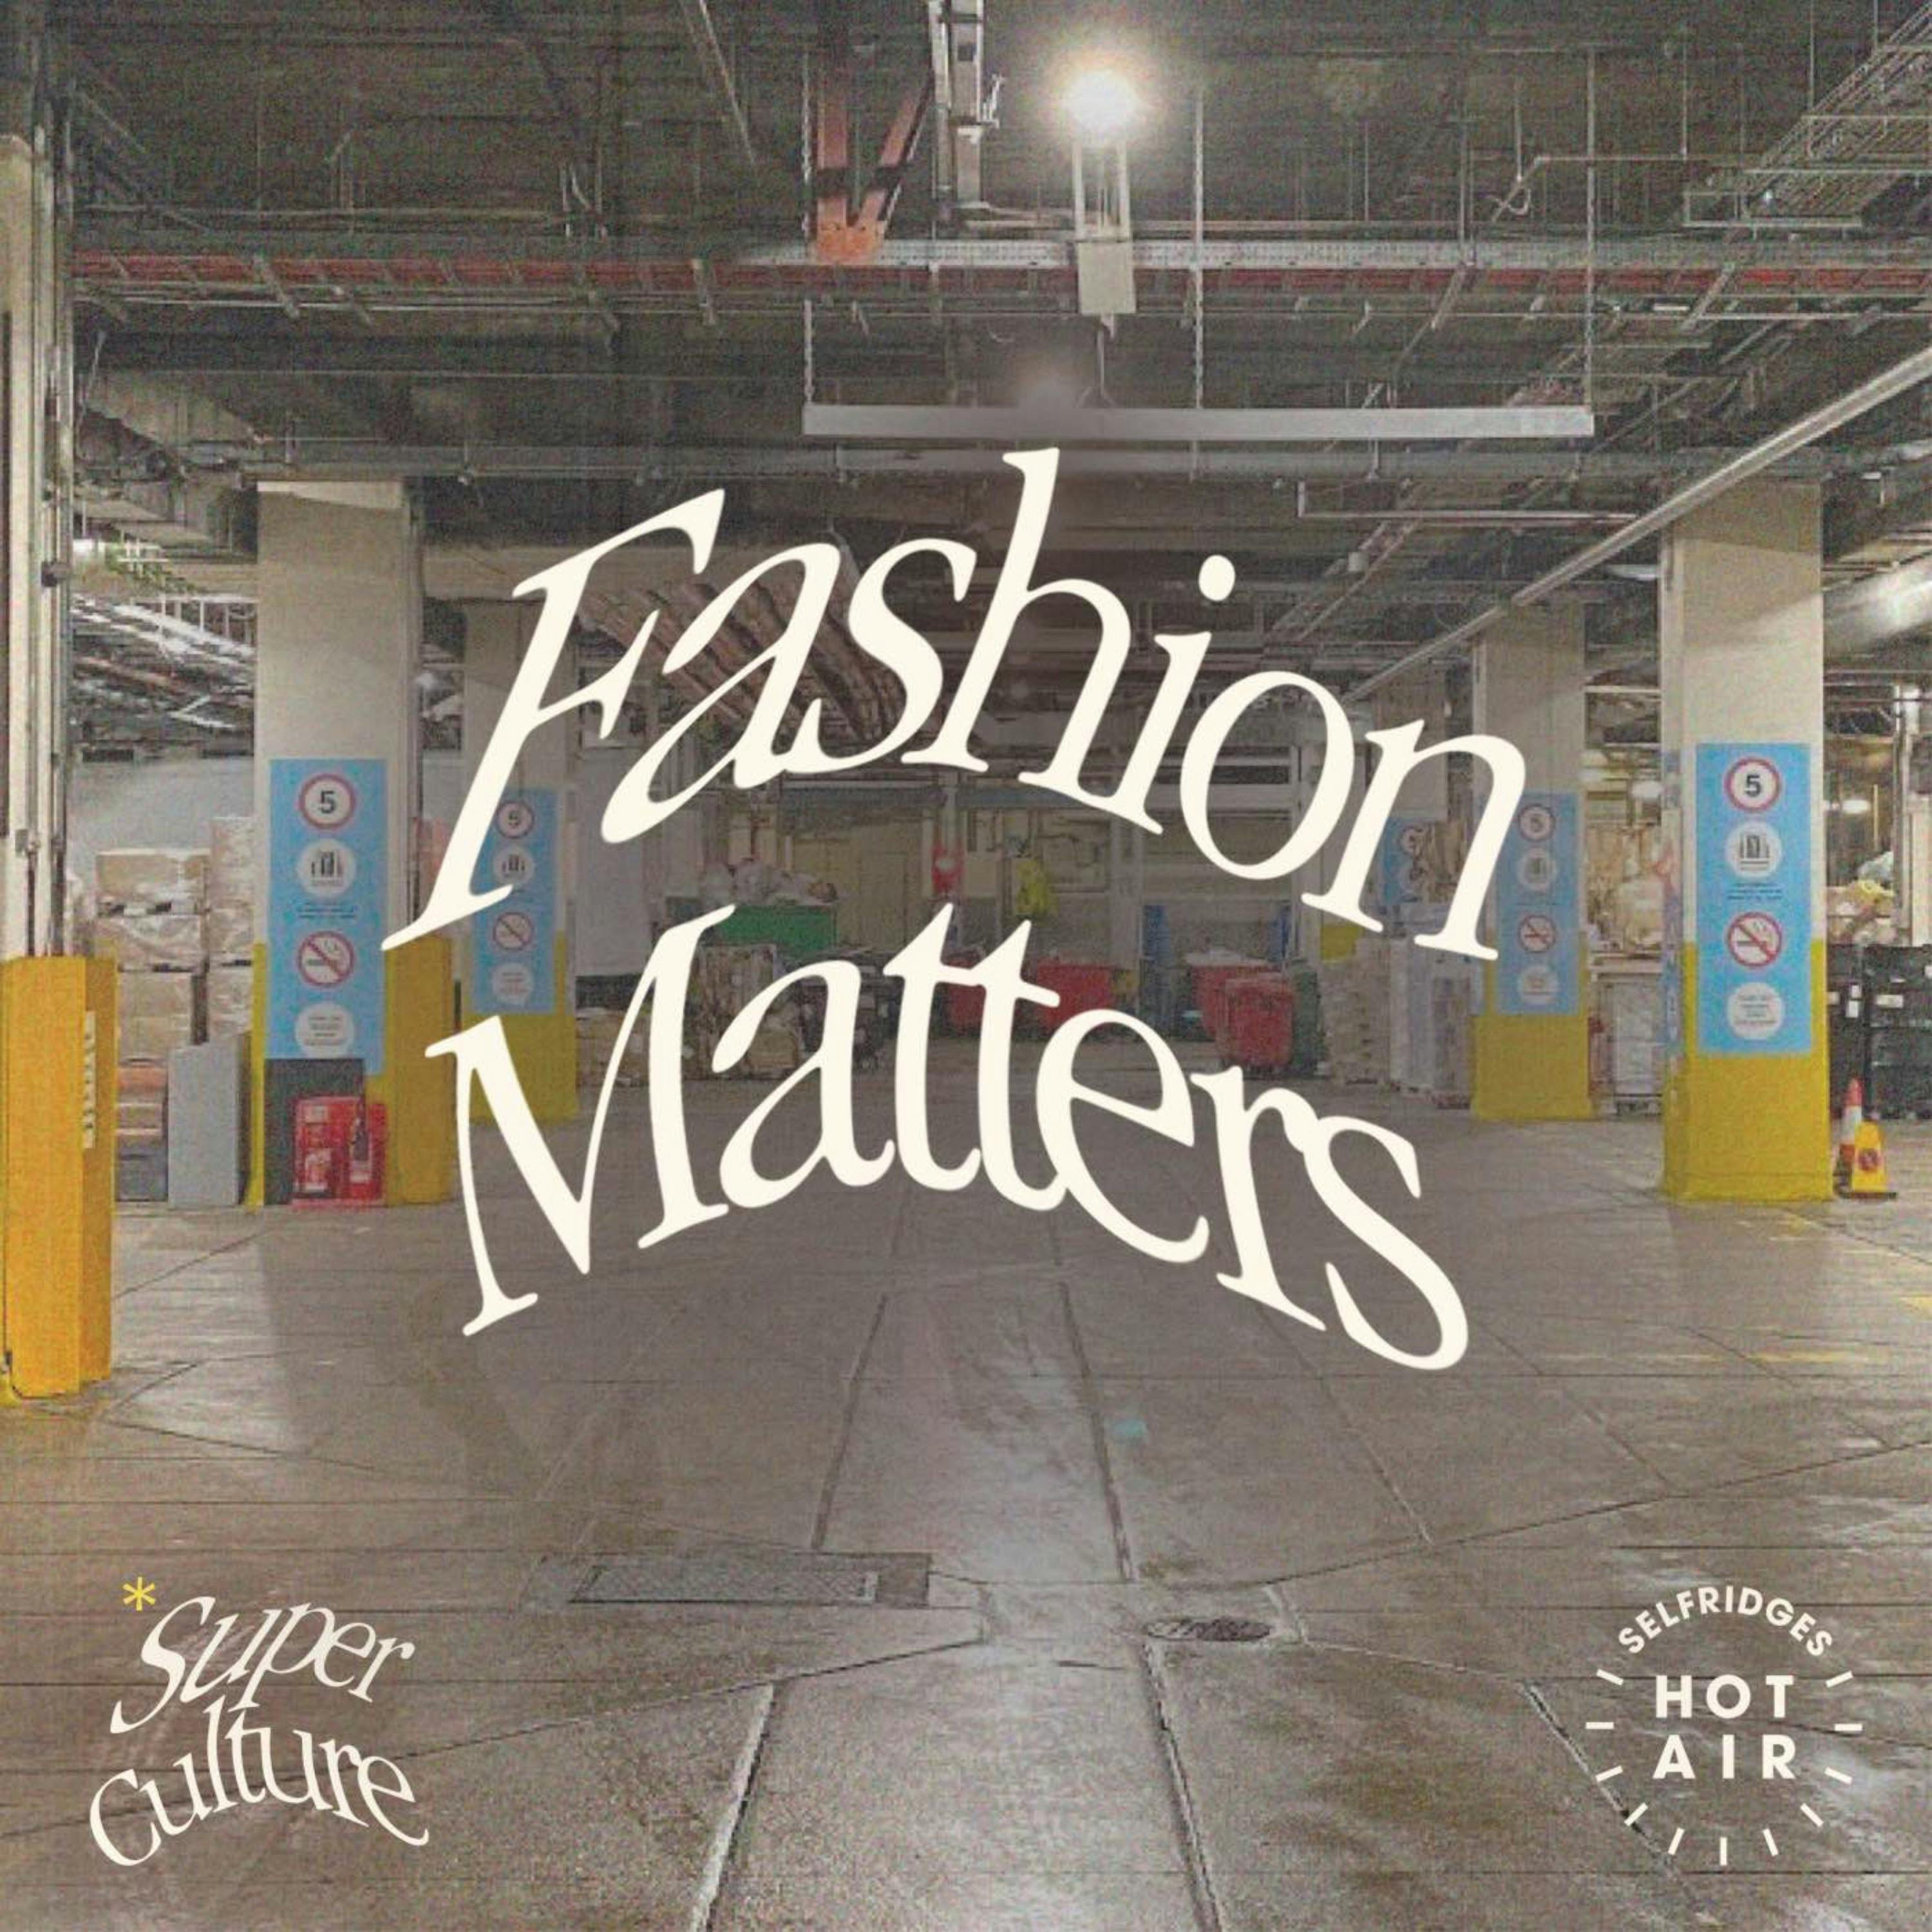 Super Culture: Fashion Matters